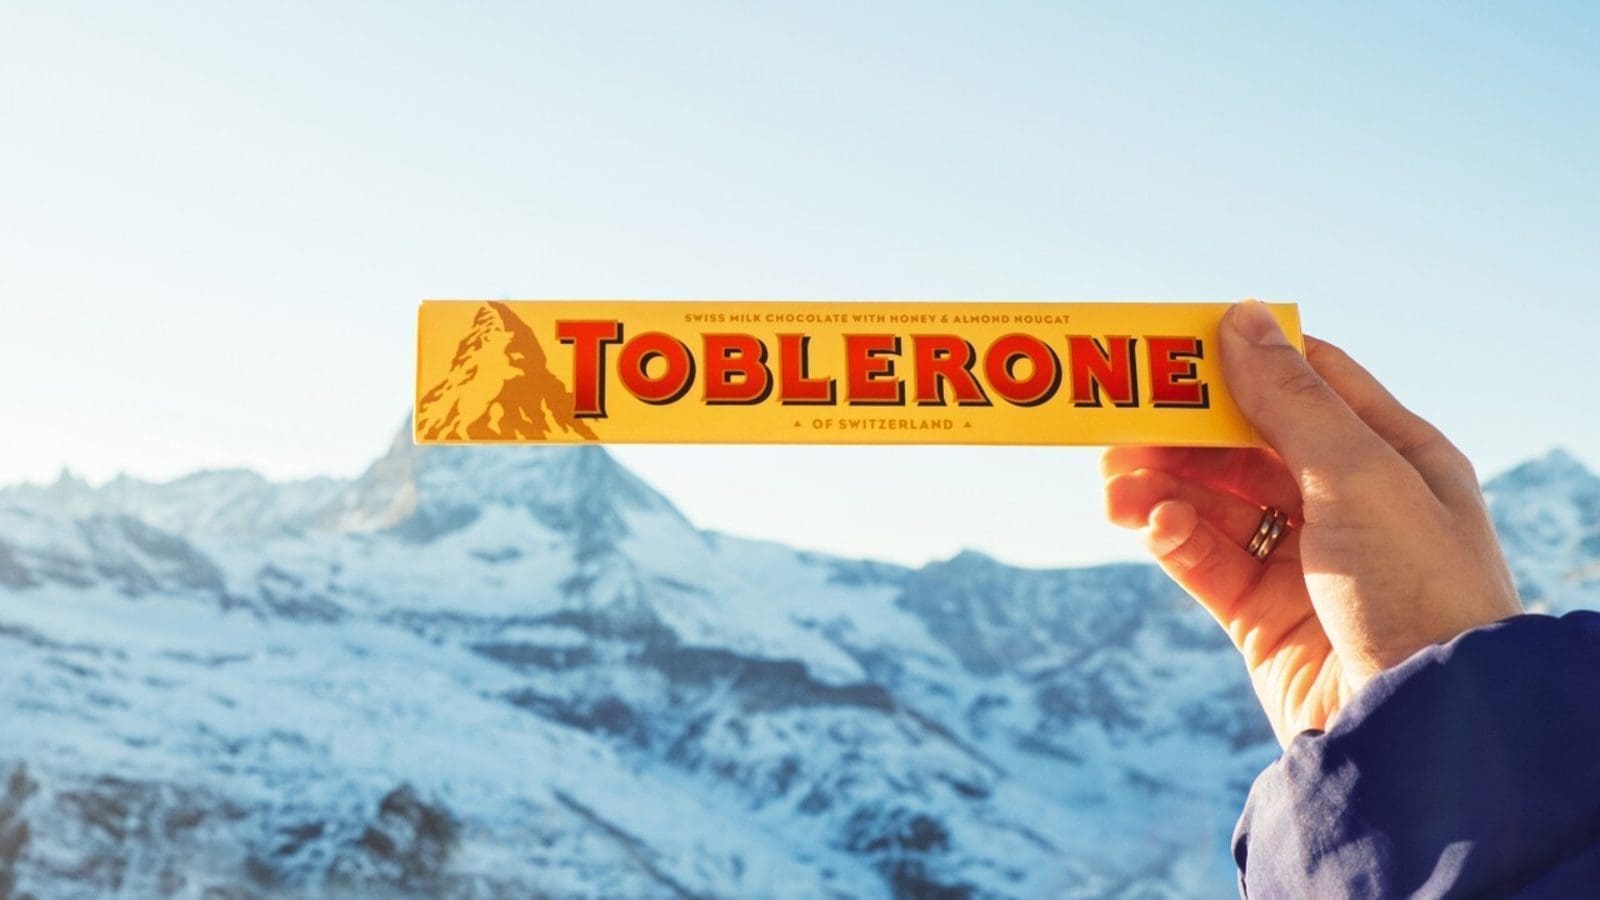 Mondelez redesigns Toblerone chocolate brand logo from Alps to generic mountain